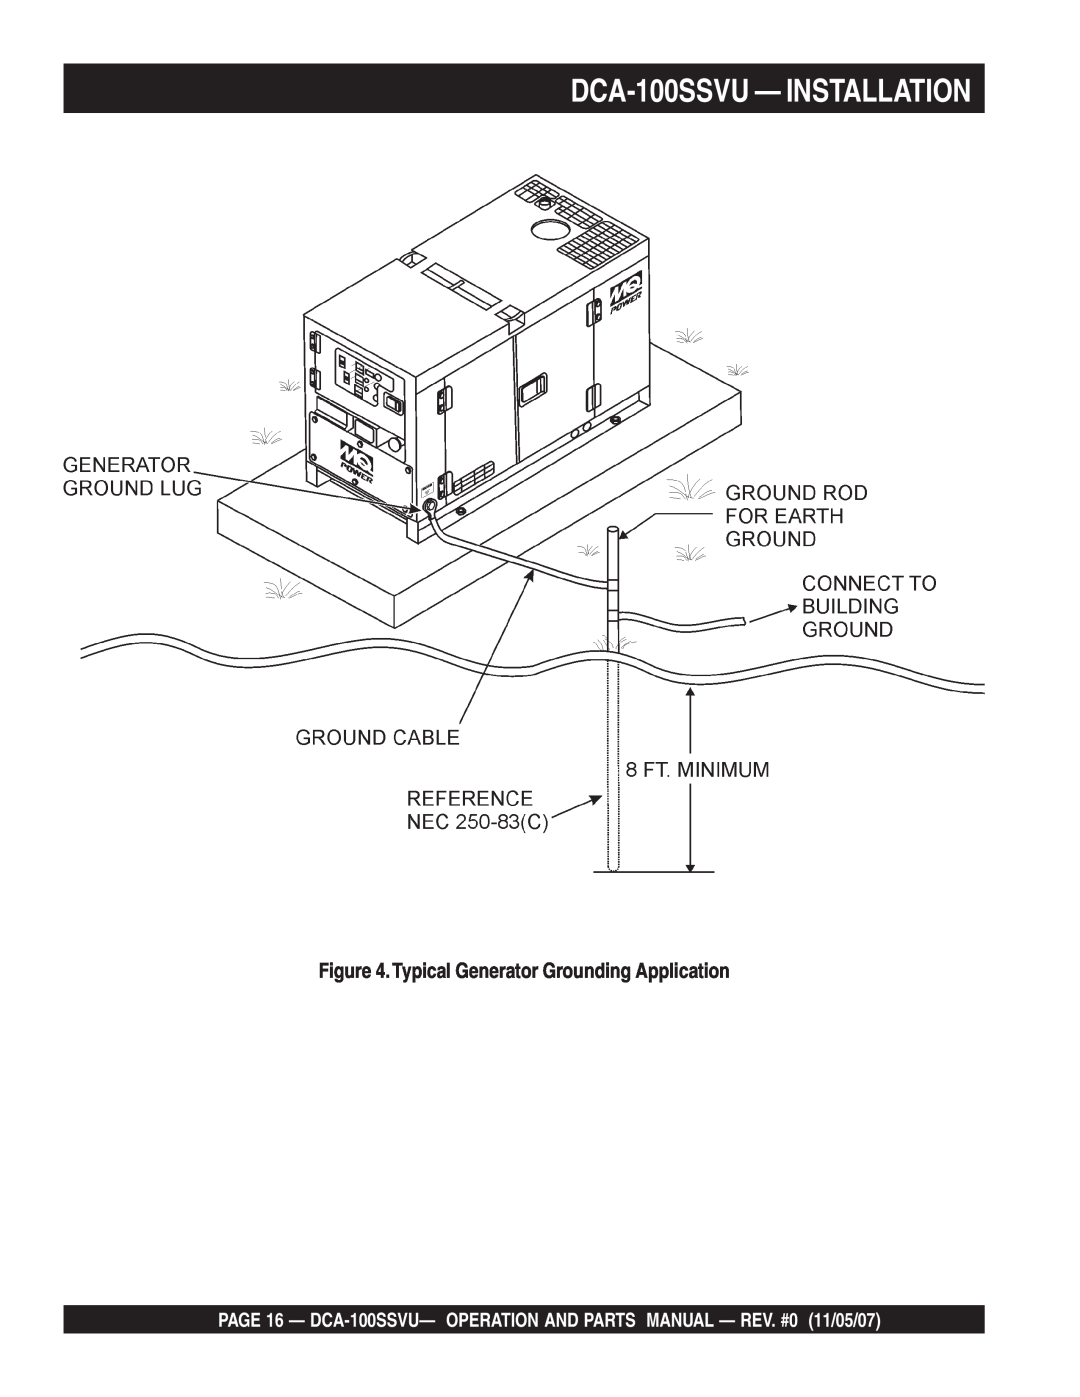 Multiquip operation manual DCA-100SSVU— INSTALLATION, Typical Generator Grounding Application 